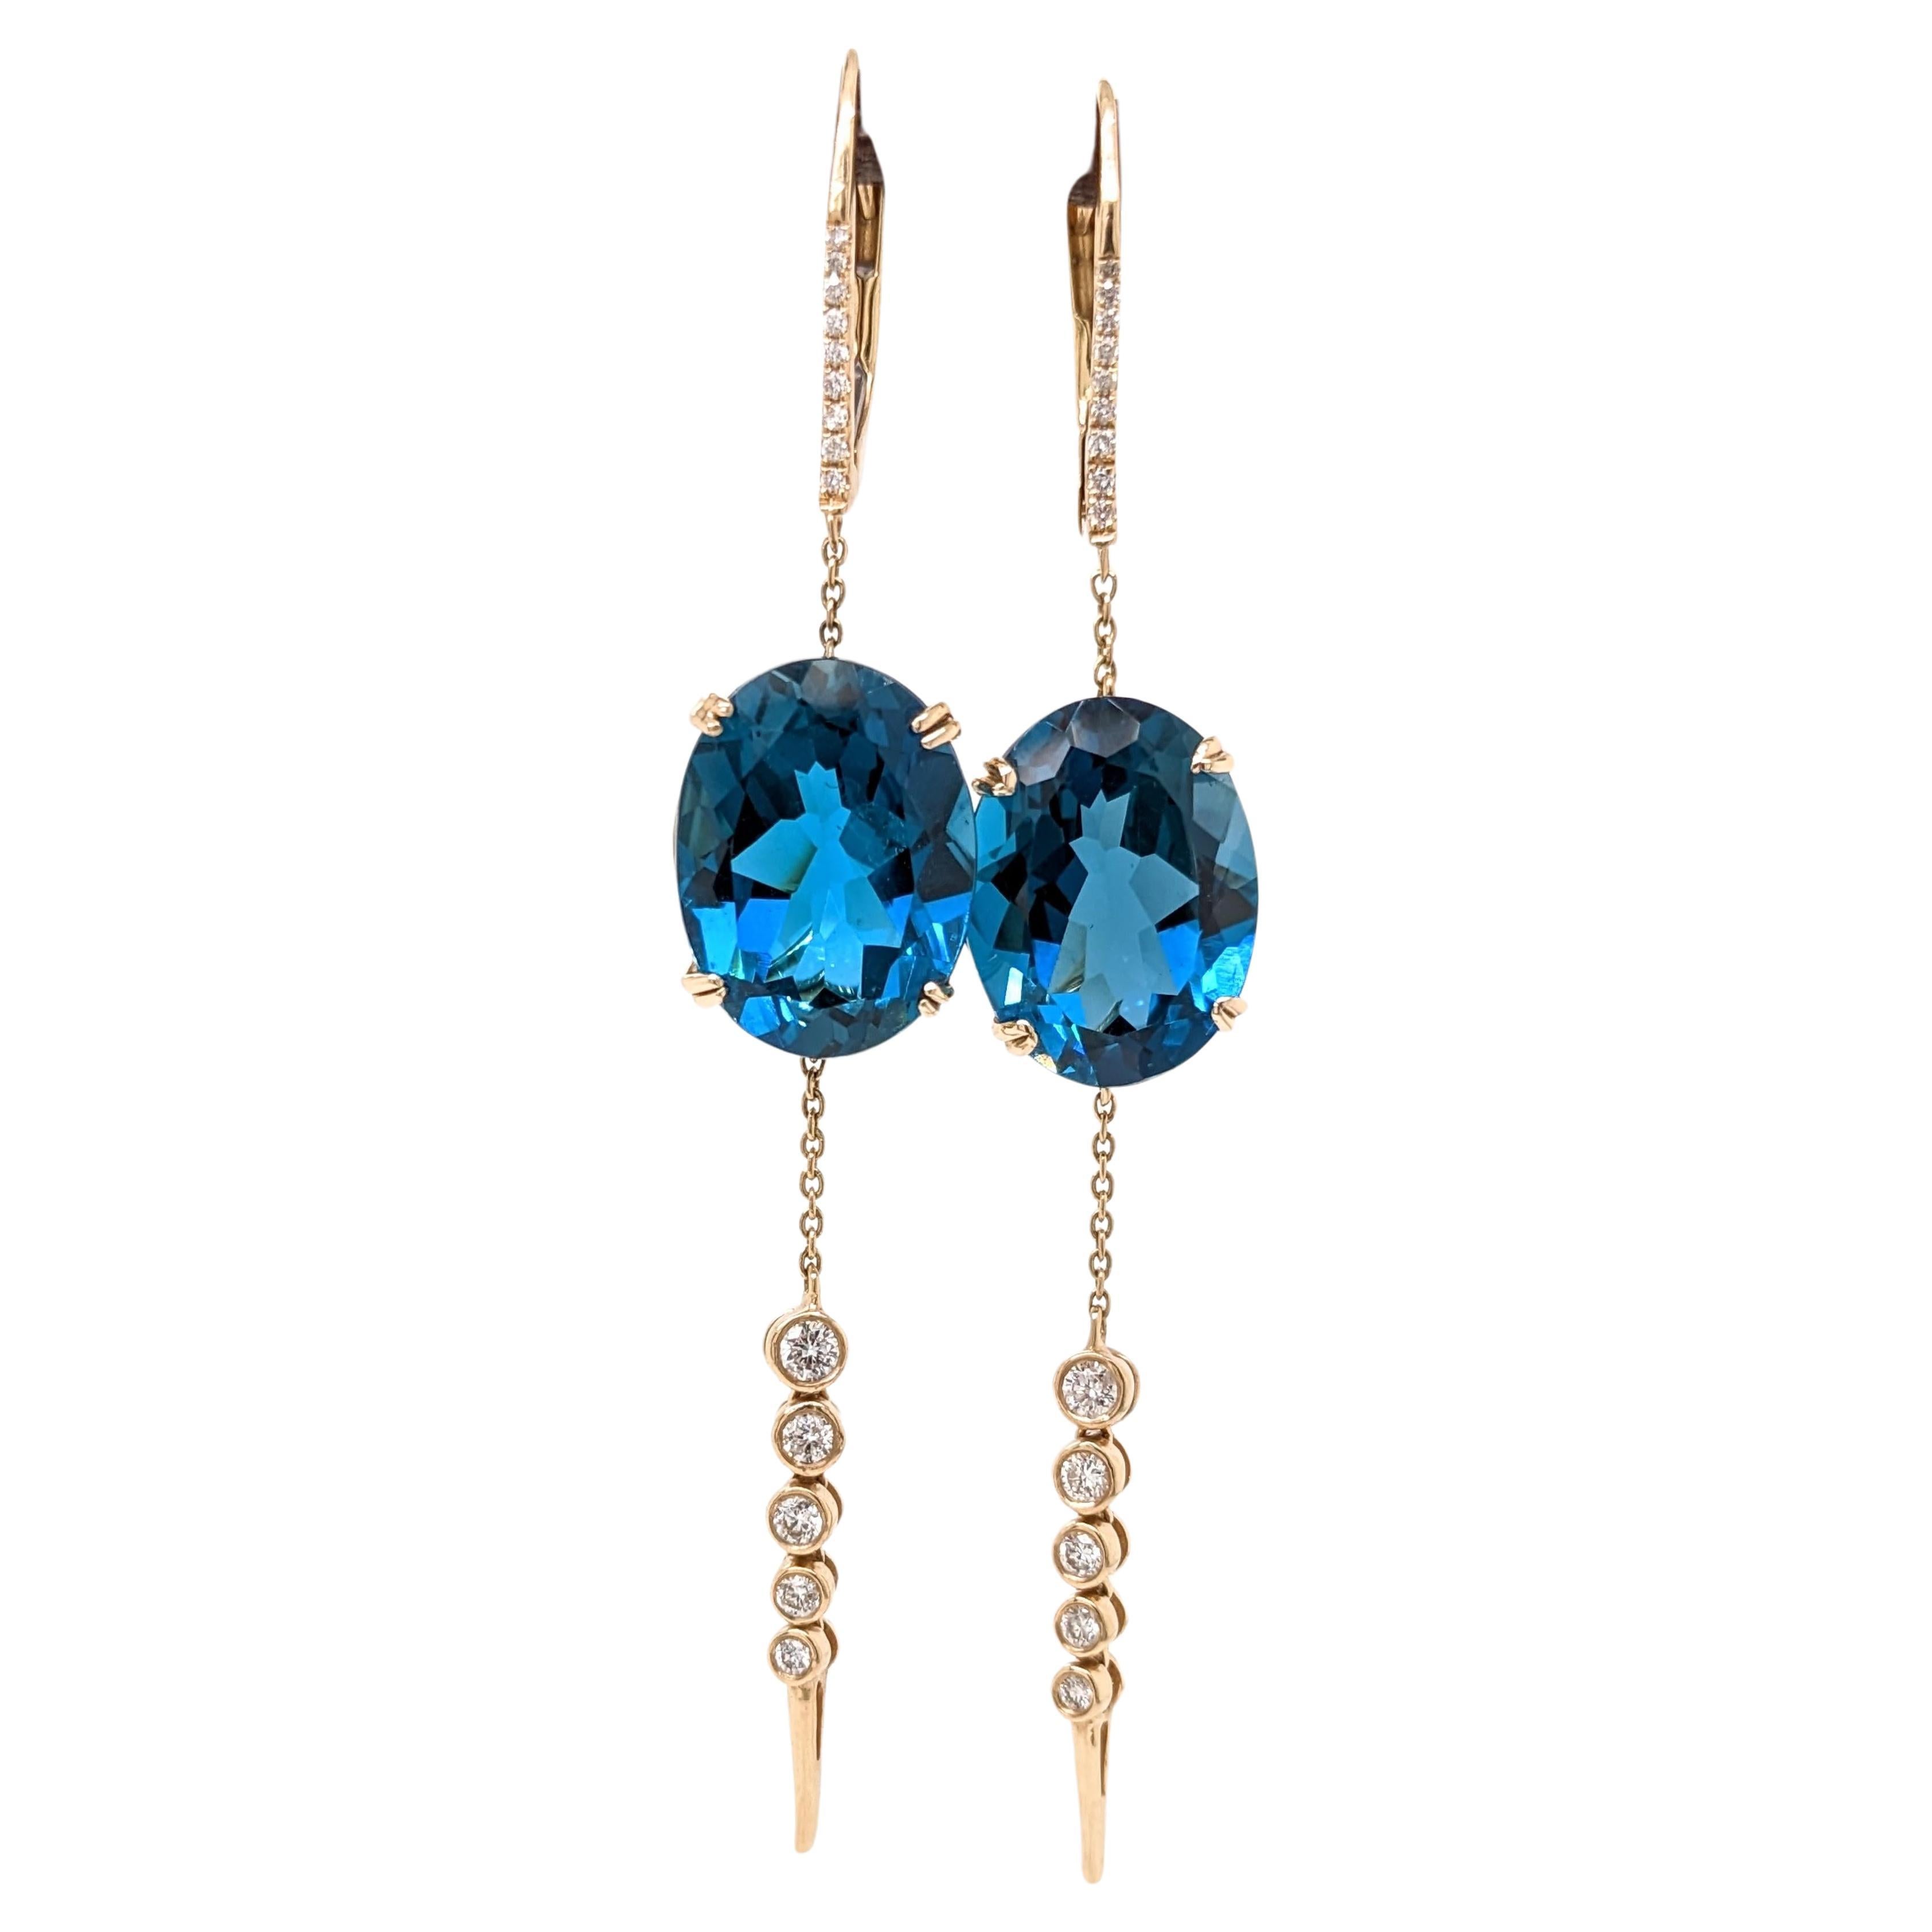 23 cttw London Blue Topaz Dangle Earrings w Natural Diamonds in 14k Solid Gold